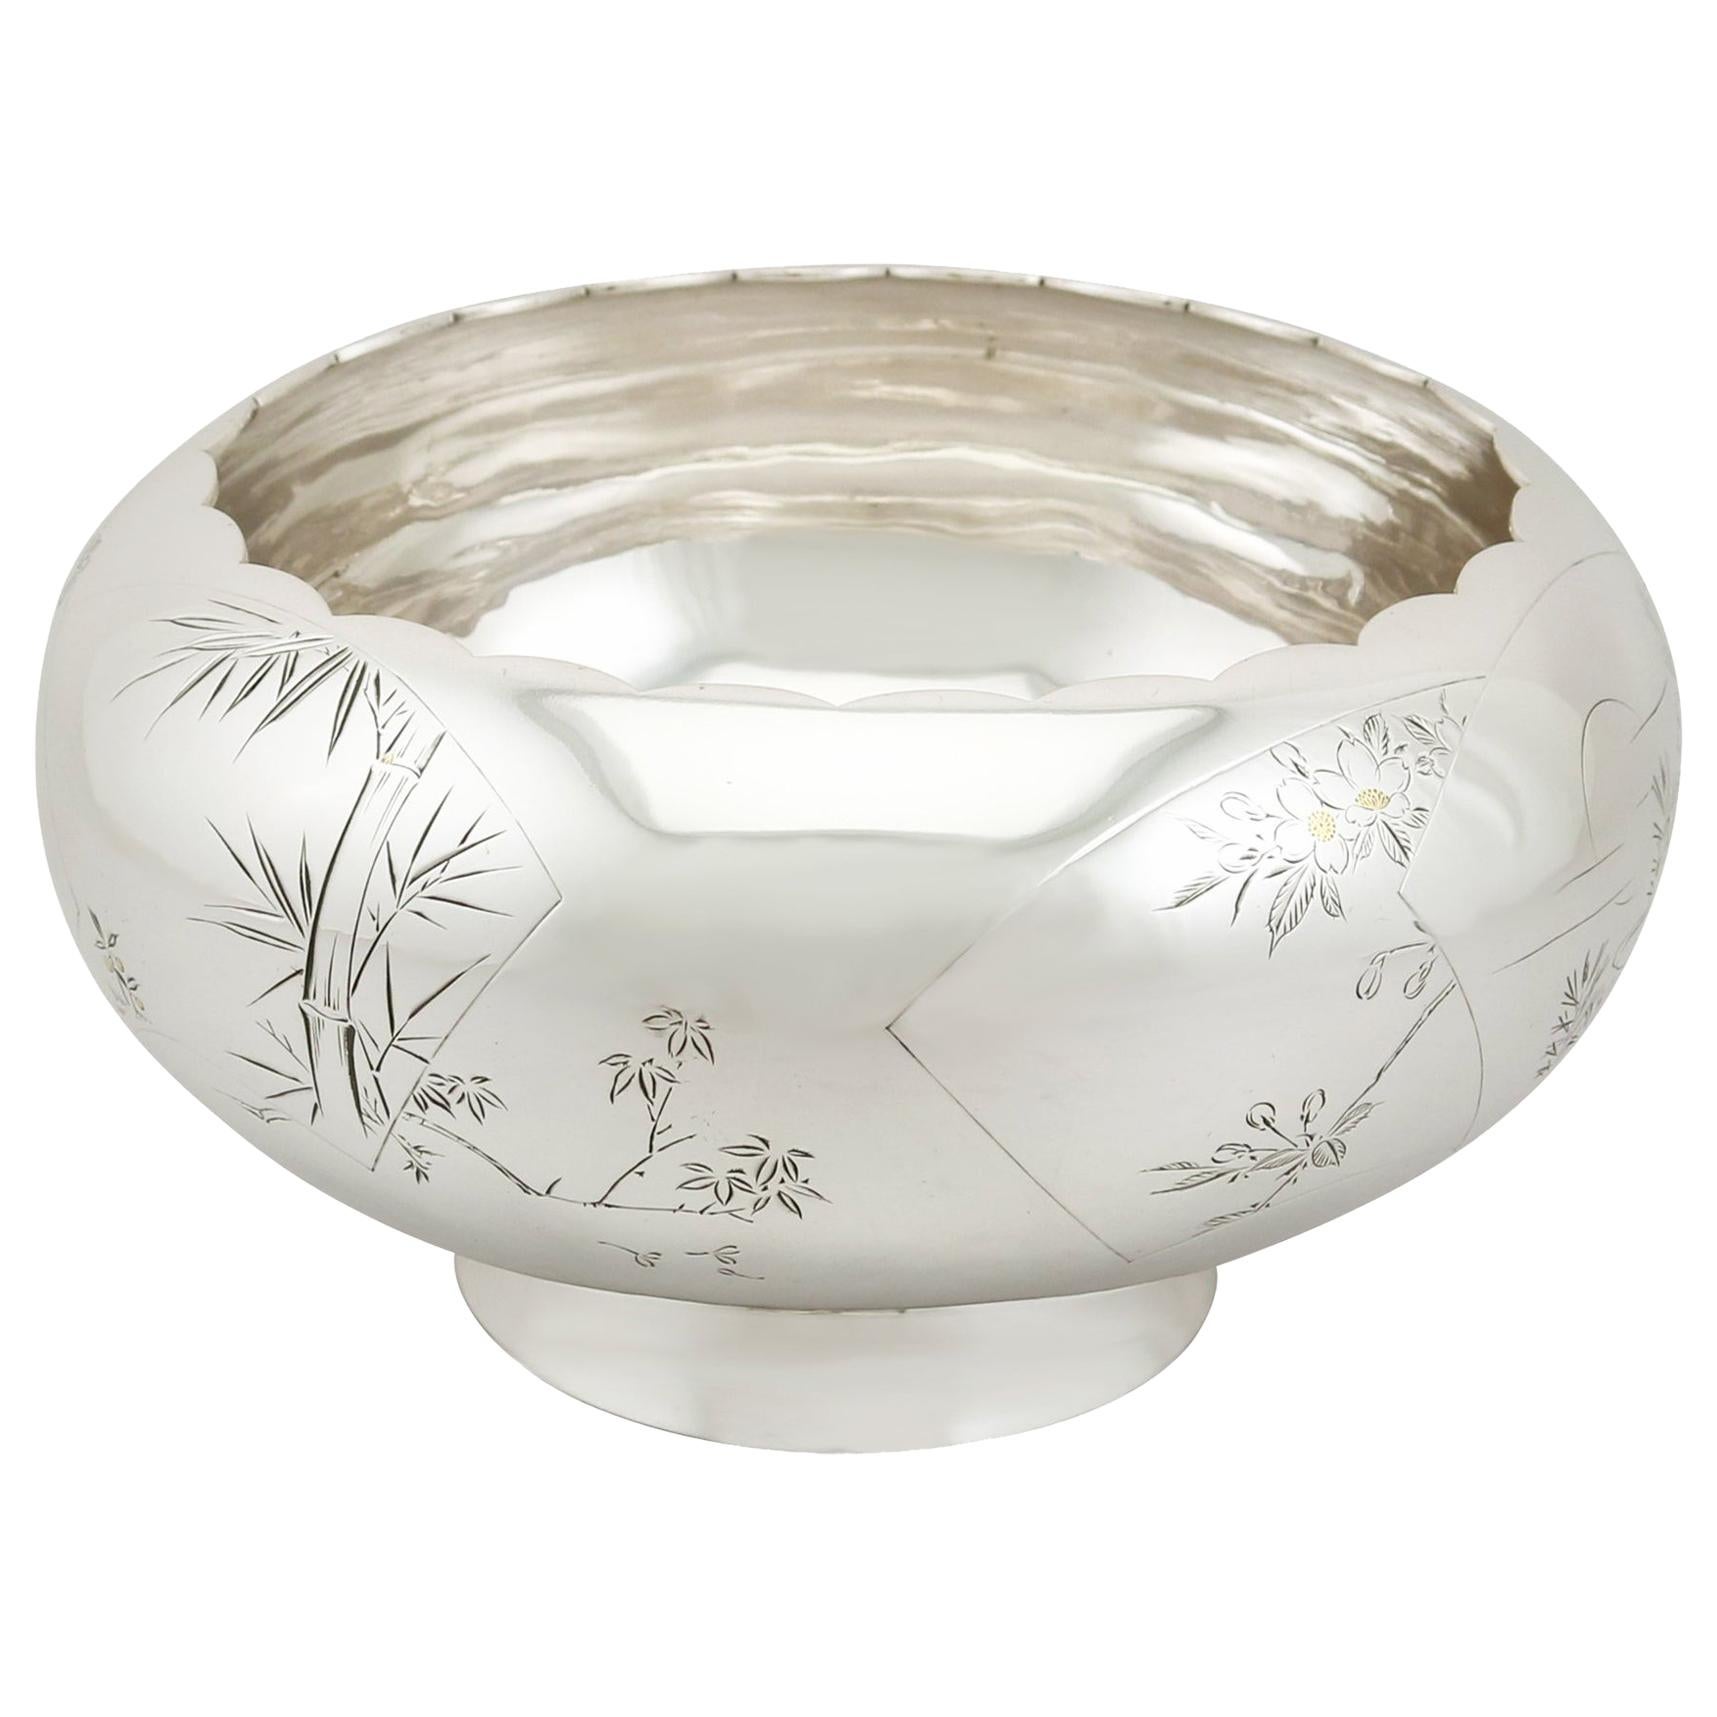 1940s Antique Japanese Silver Presentation Bowl